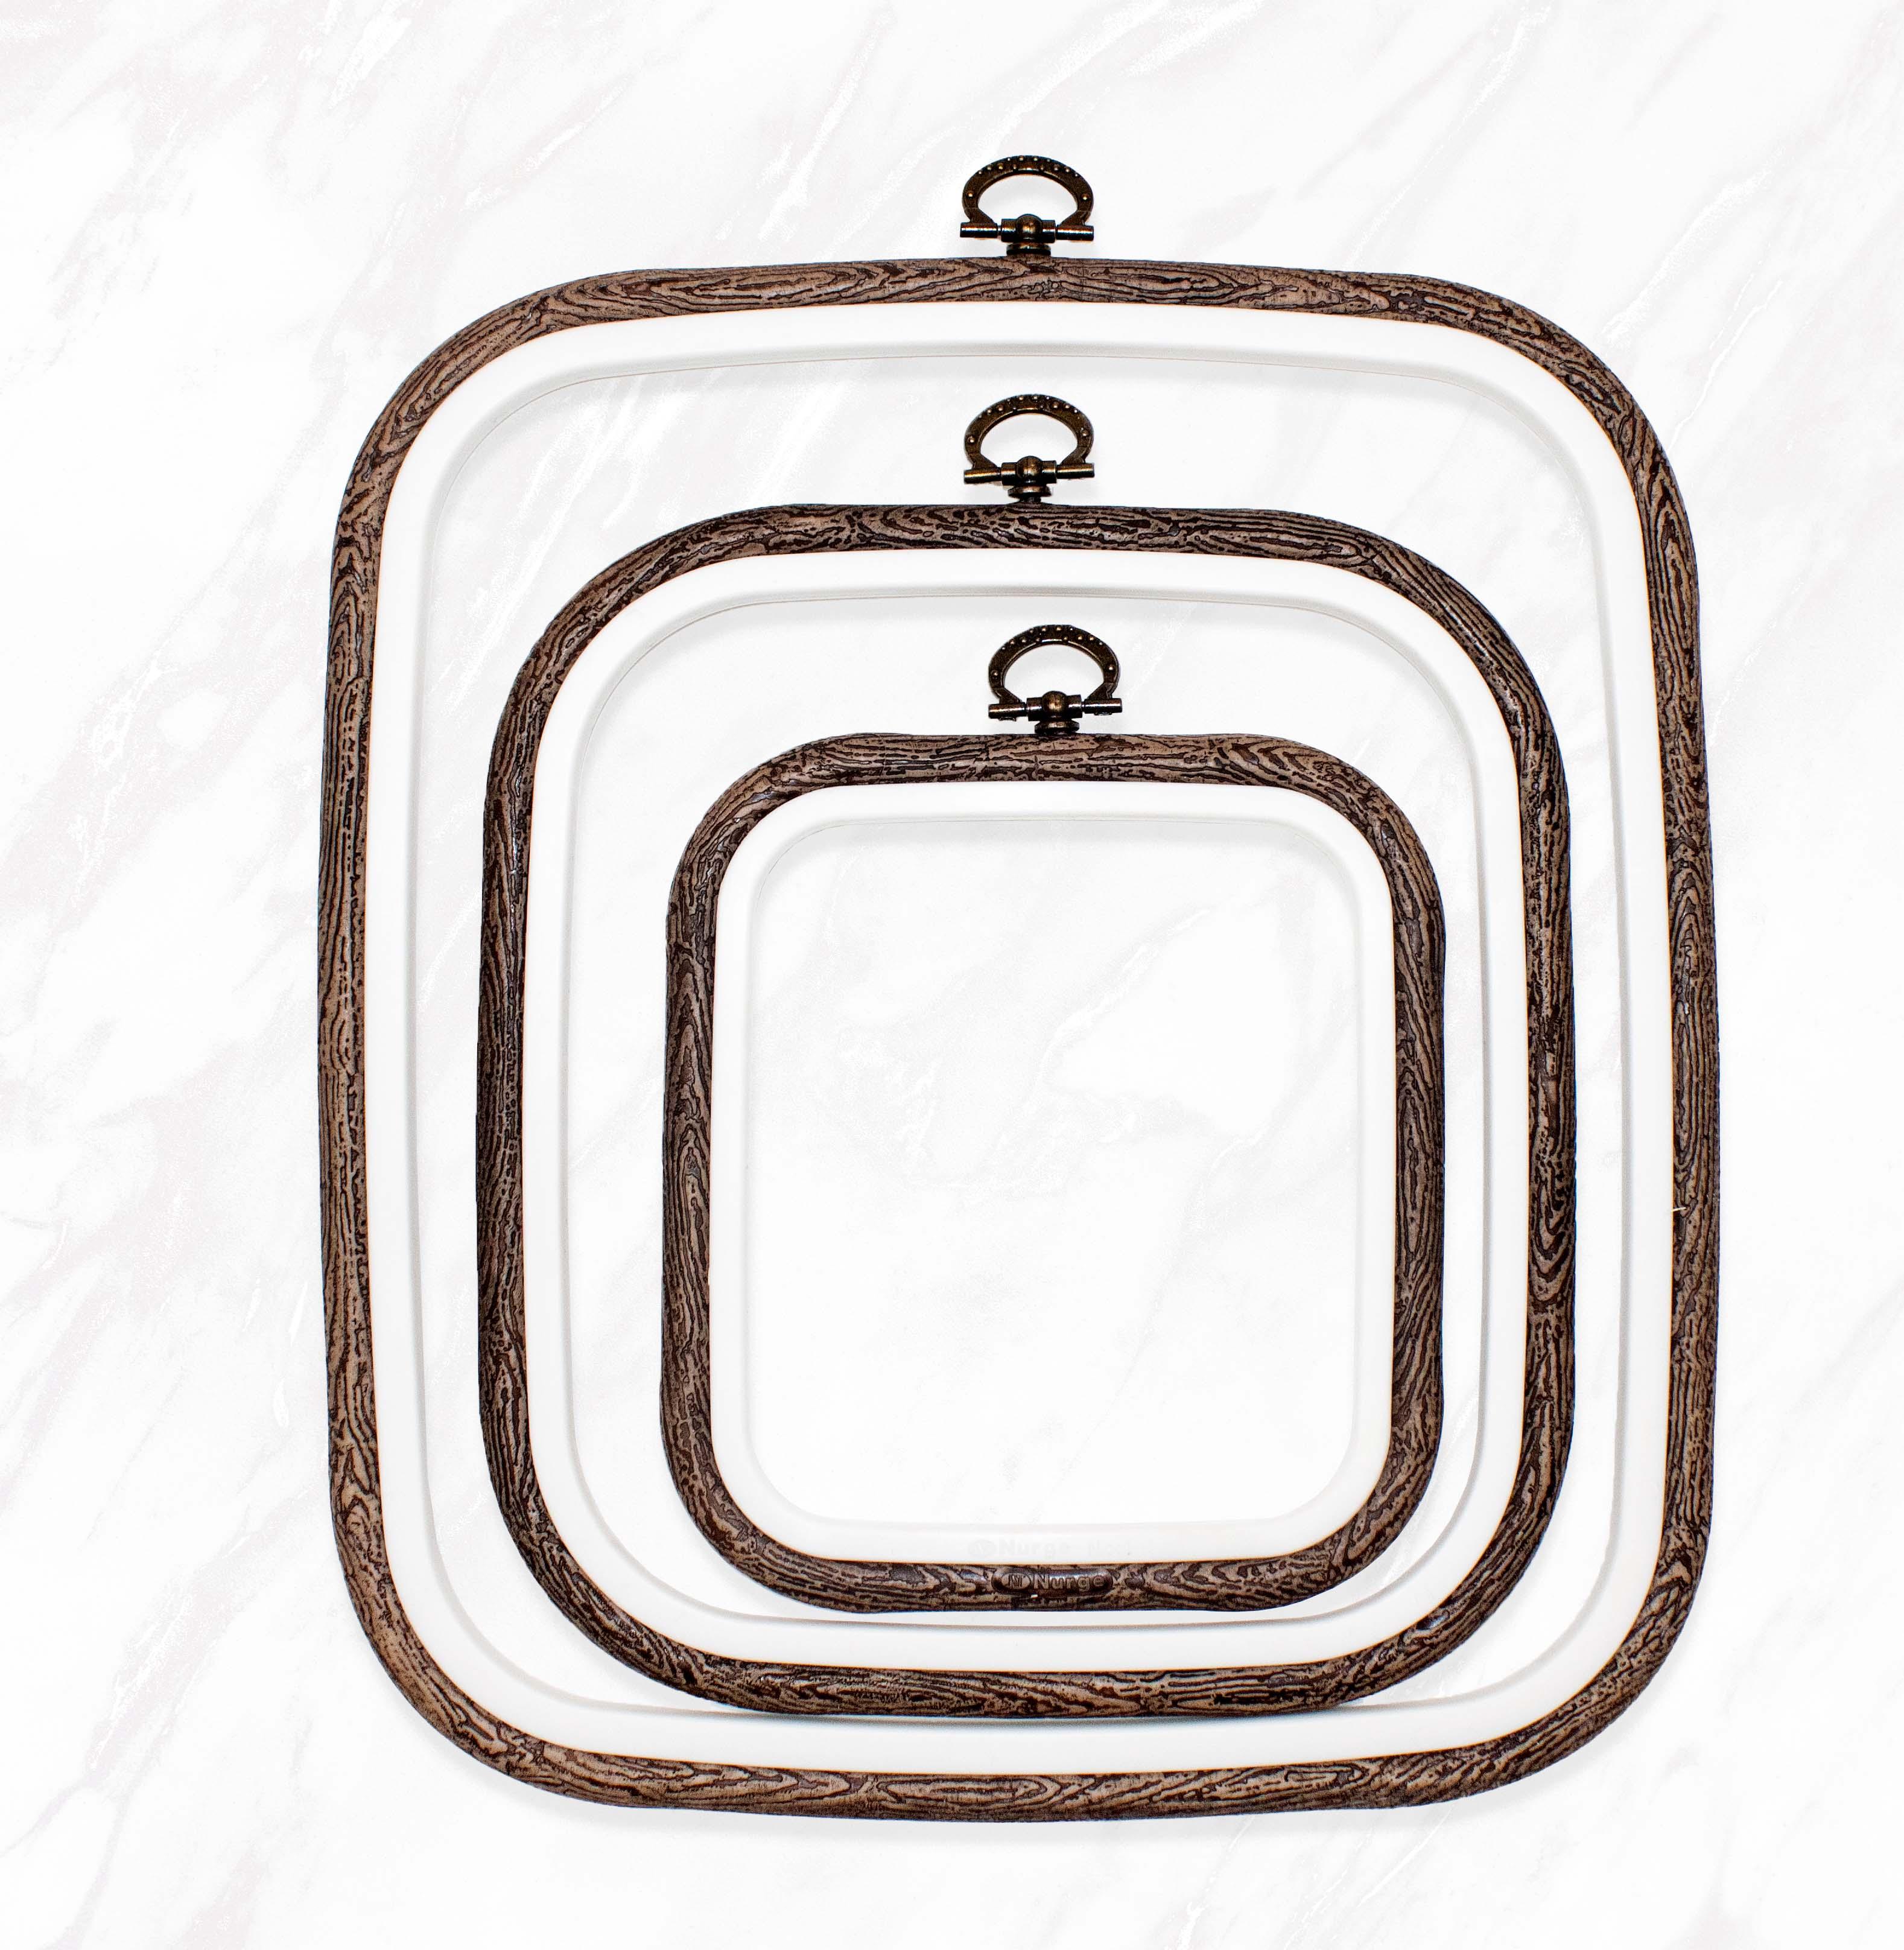 Nurge Embroidery Hoop (Size 4 - Lg) Tan - Colorado Cross Stitcher